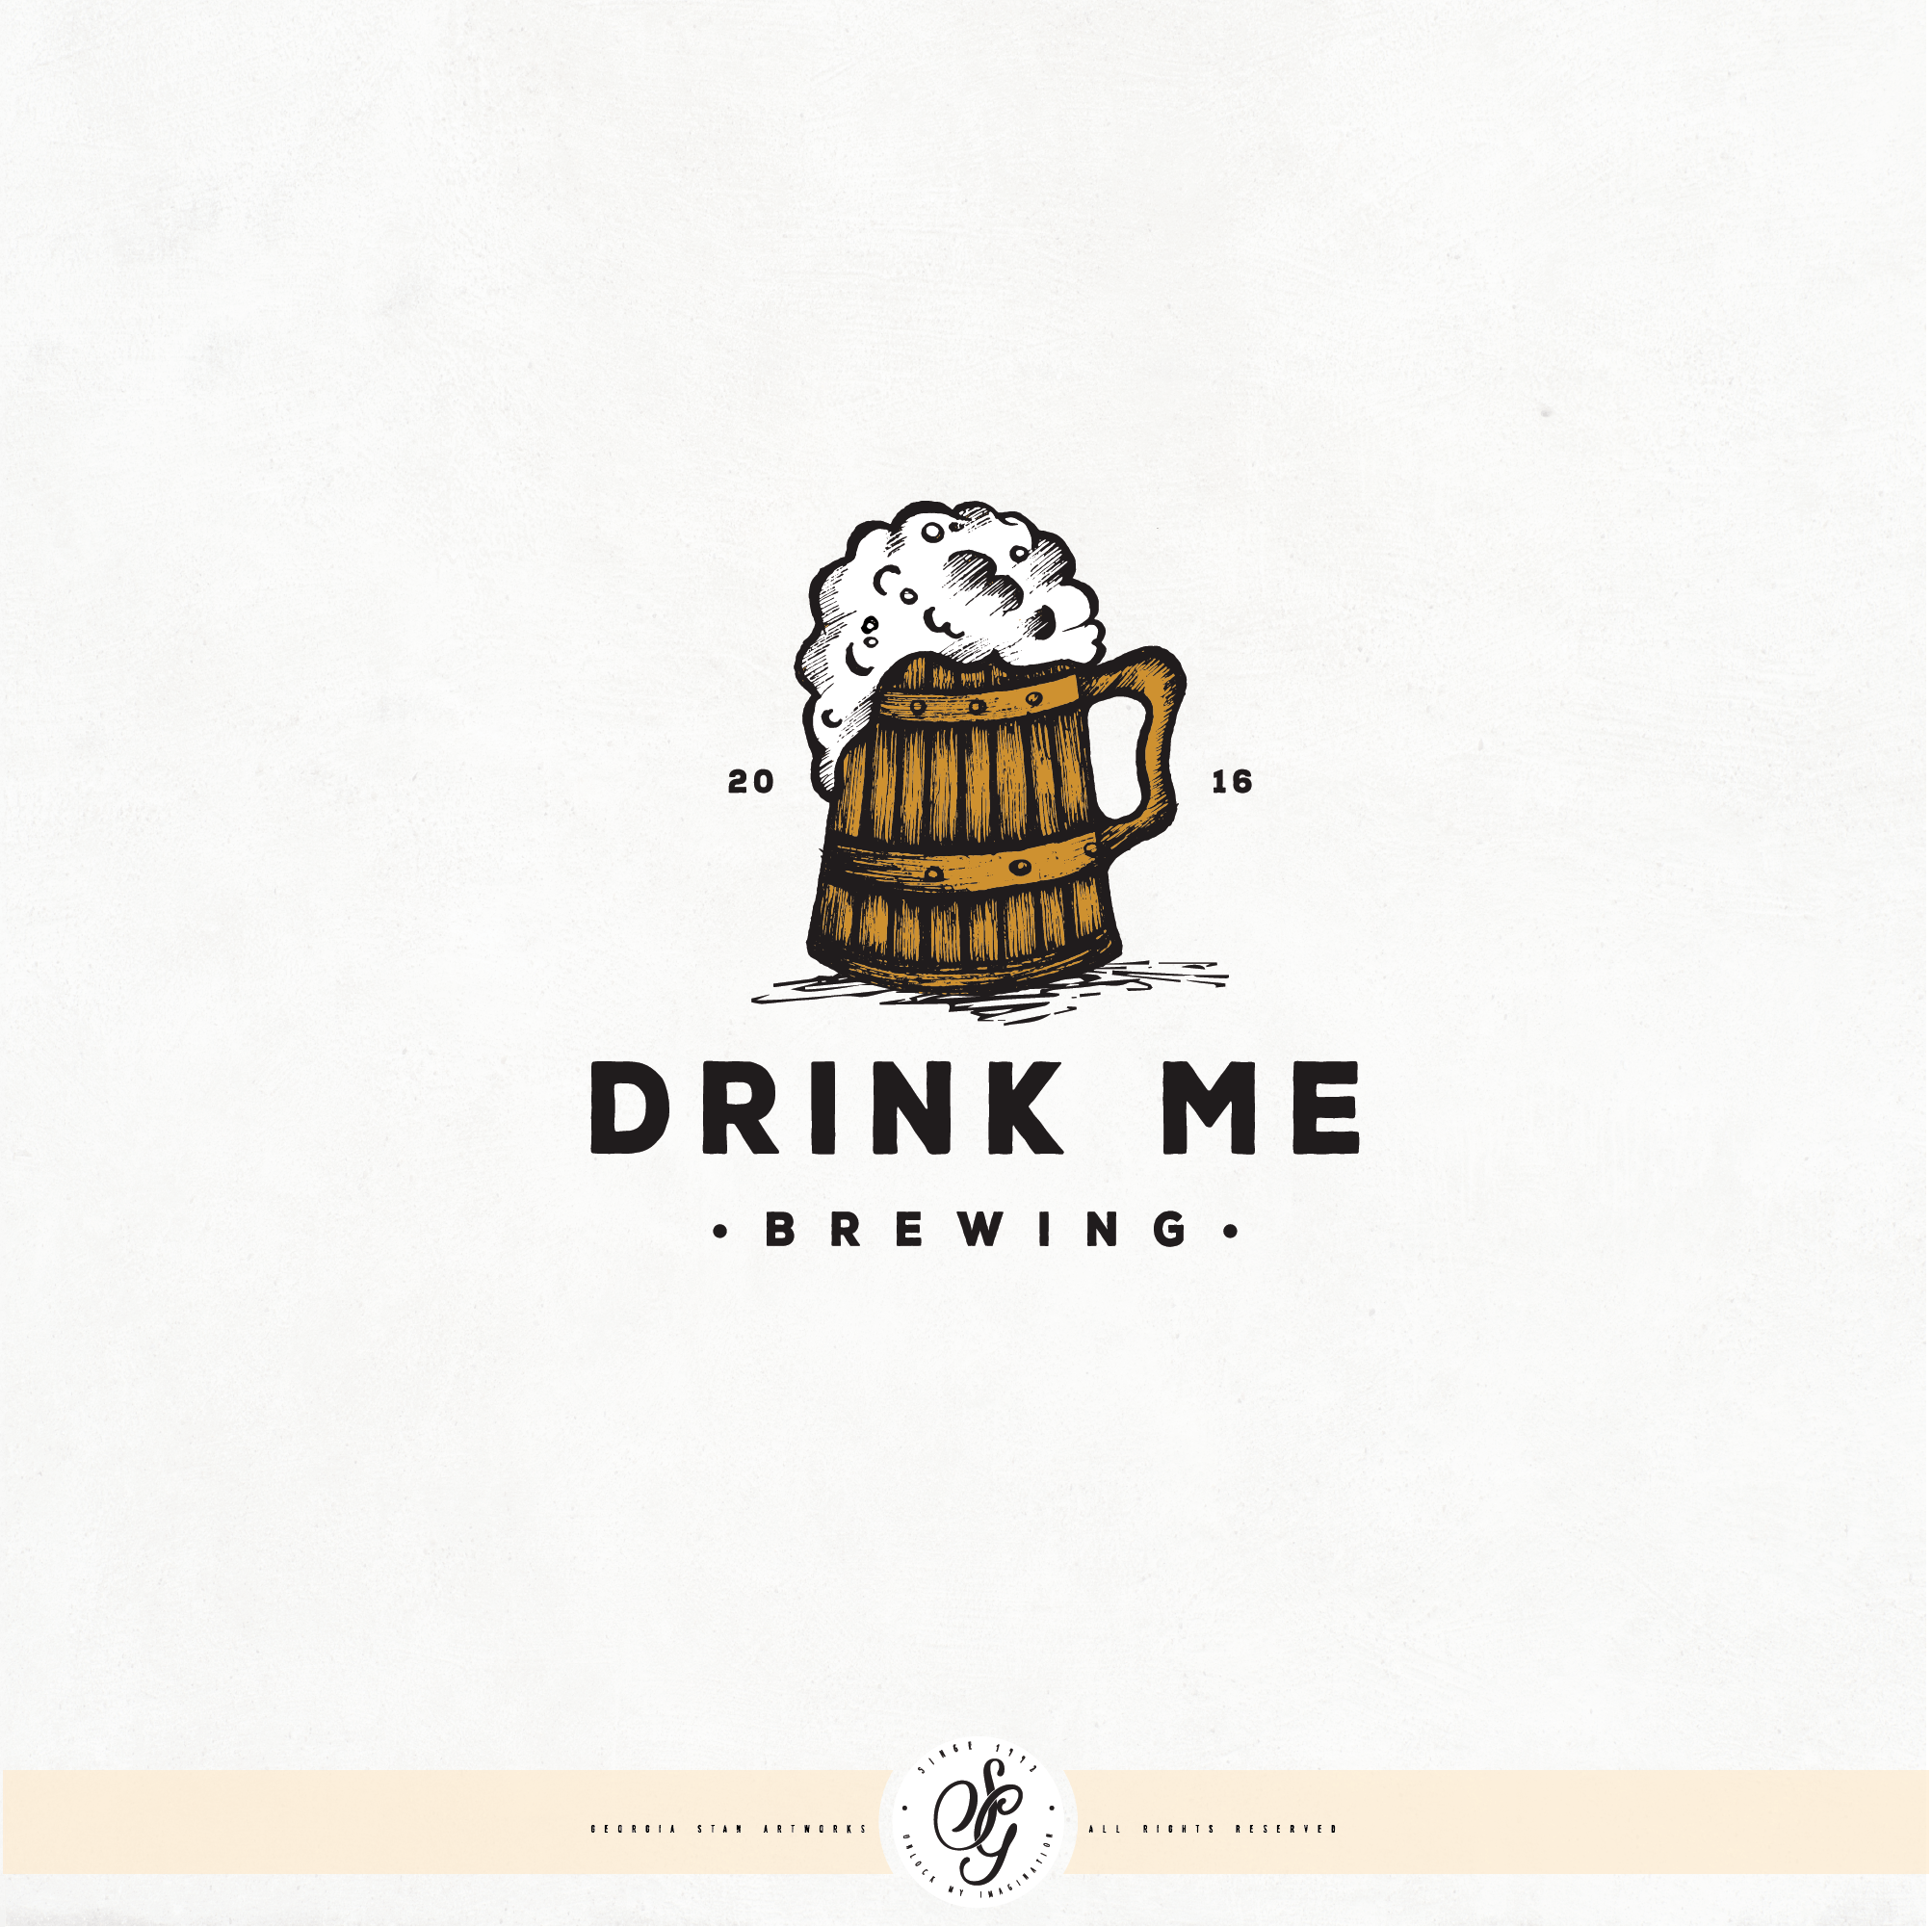 Georgia Beer Logo - Design by Georgia Stan. Create a brewery logo for Drink Me